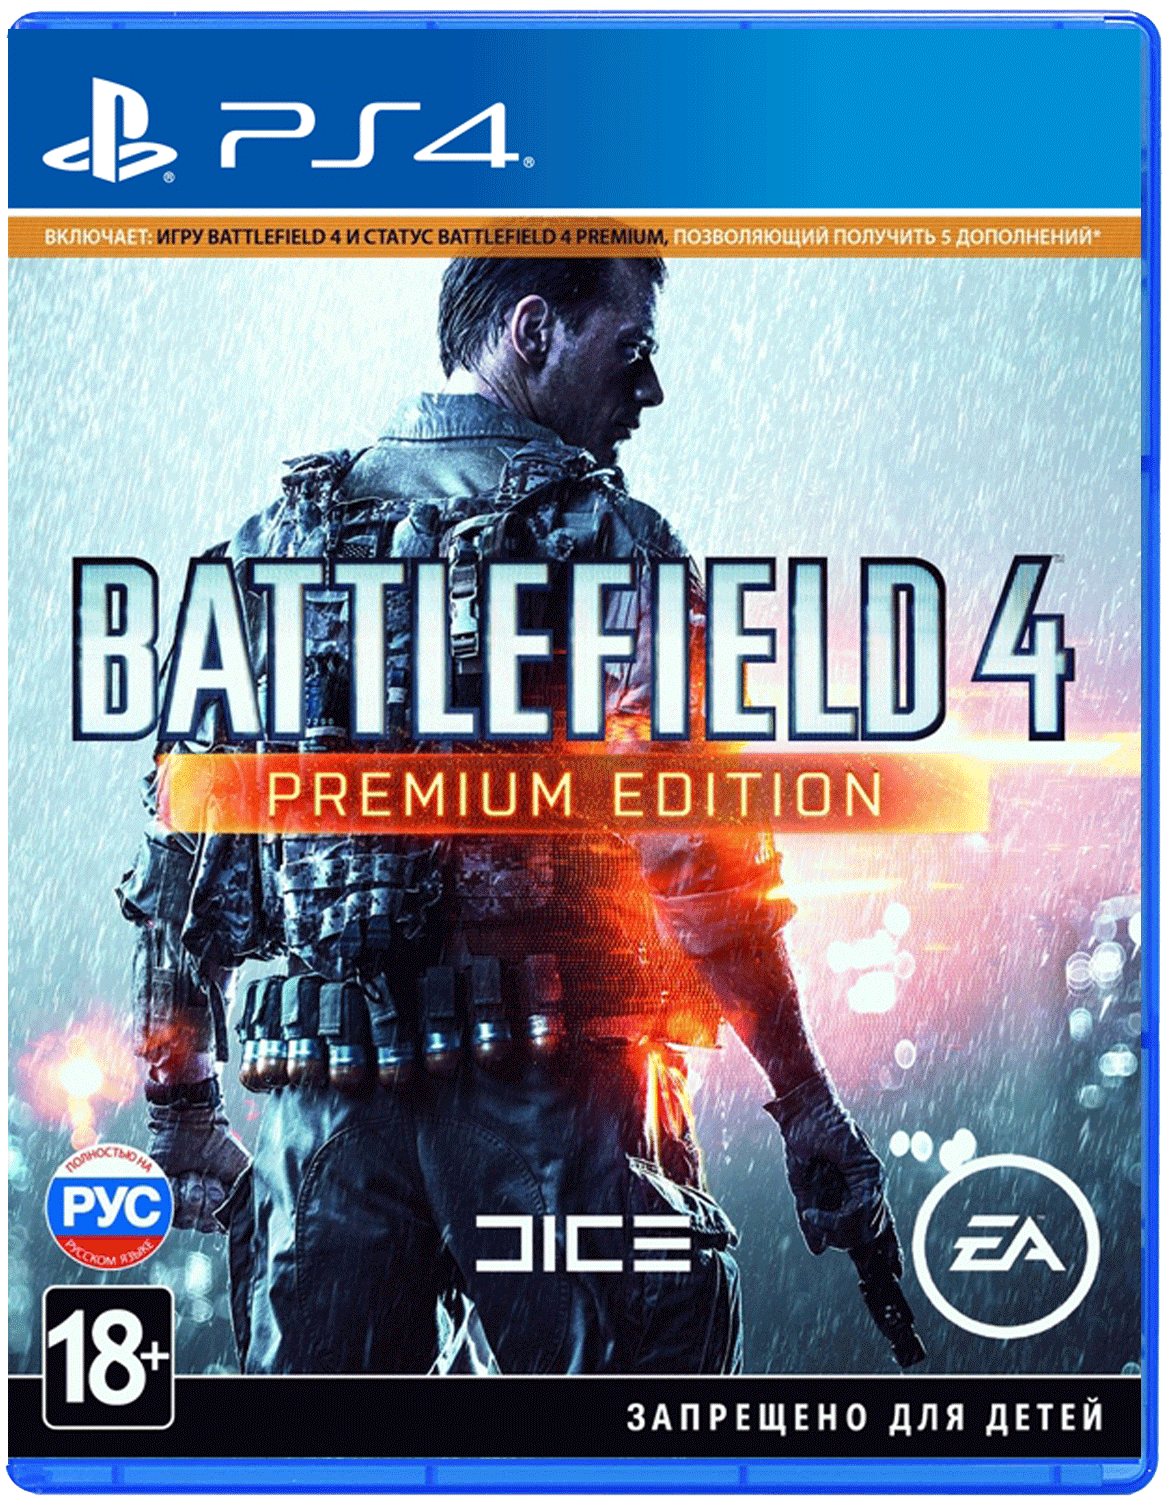 Battlefield 4 Premium Edition ps4. Battlefield 4 ps4 диск. Диск для ps4 Battlefield 4 Premium Edition. Battlefield ps4 игры на ps4. Том игр на пс 4